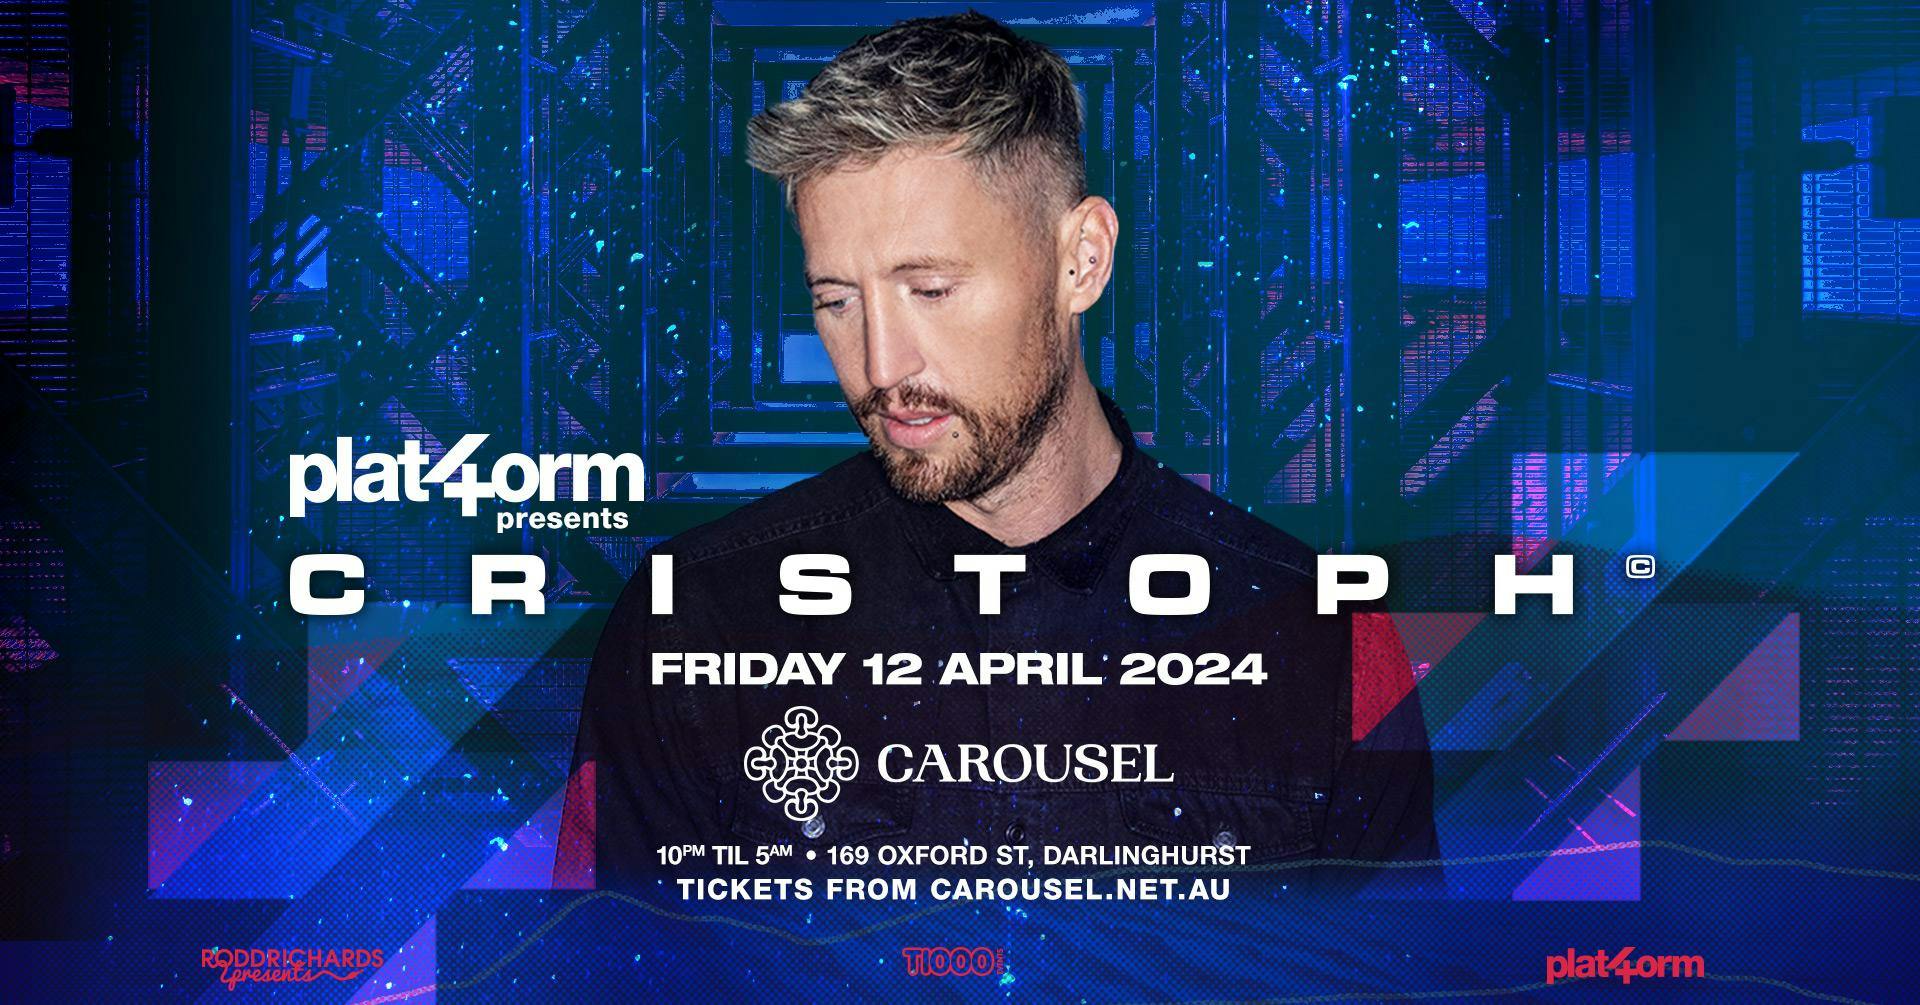 Plat4orm presents Cristoph @ Carousel - Friday 12 April 2024.